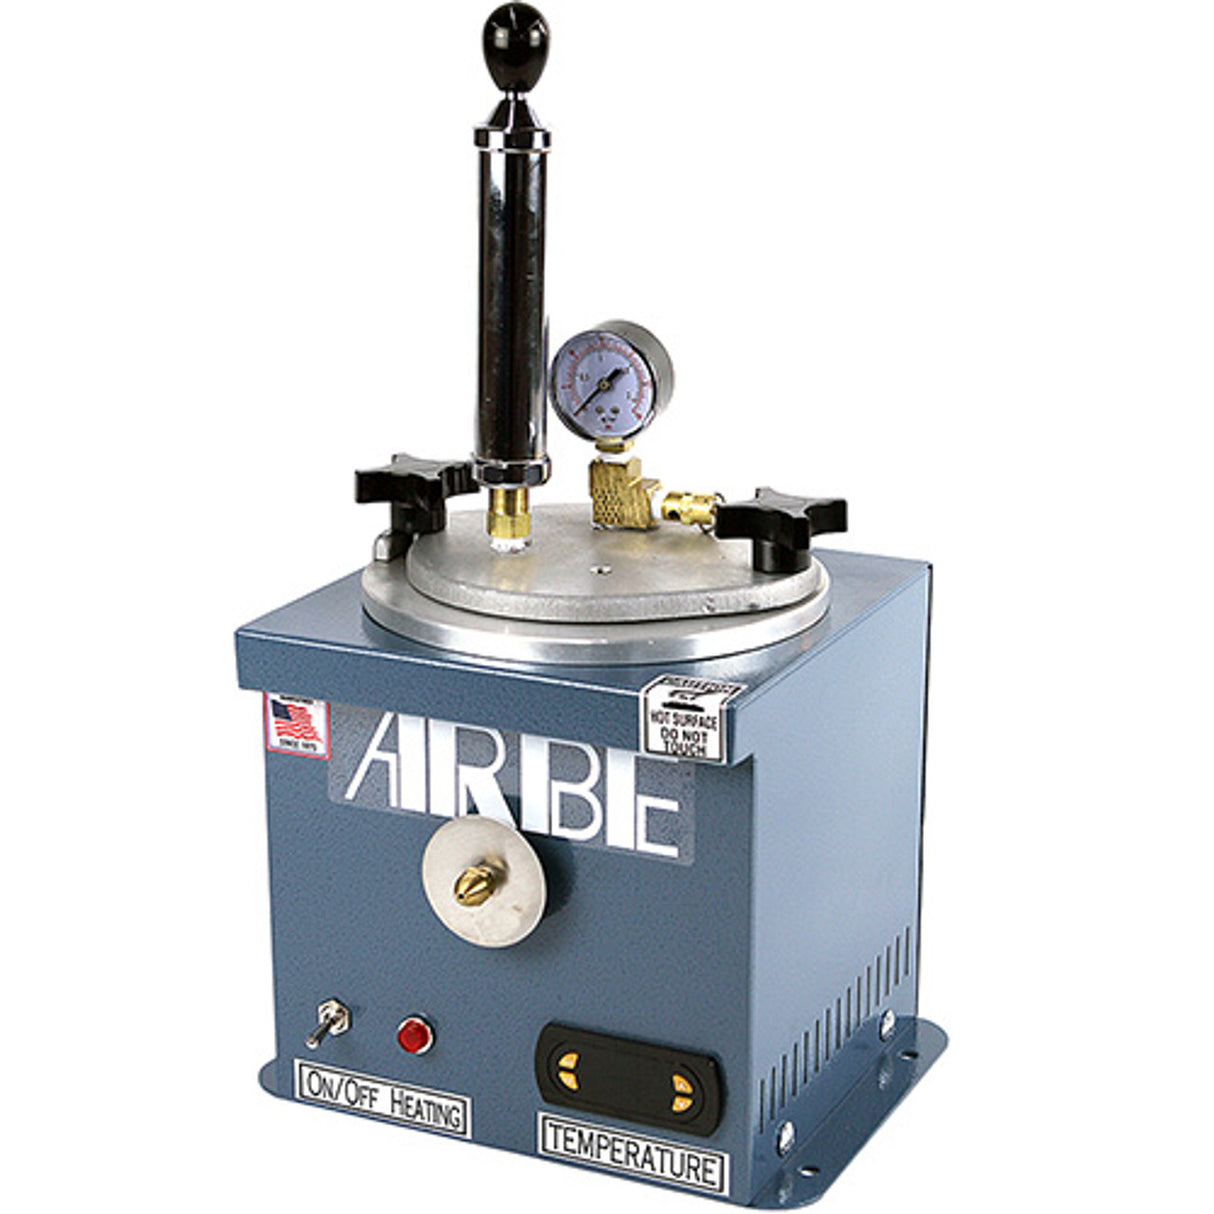 ARBE Digital Wax Injector- 1-1/3 QT with Hand Pump -110V